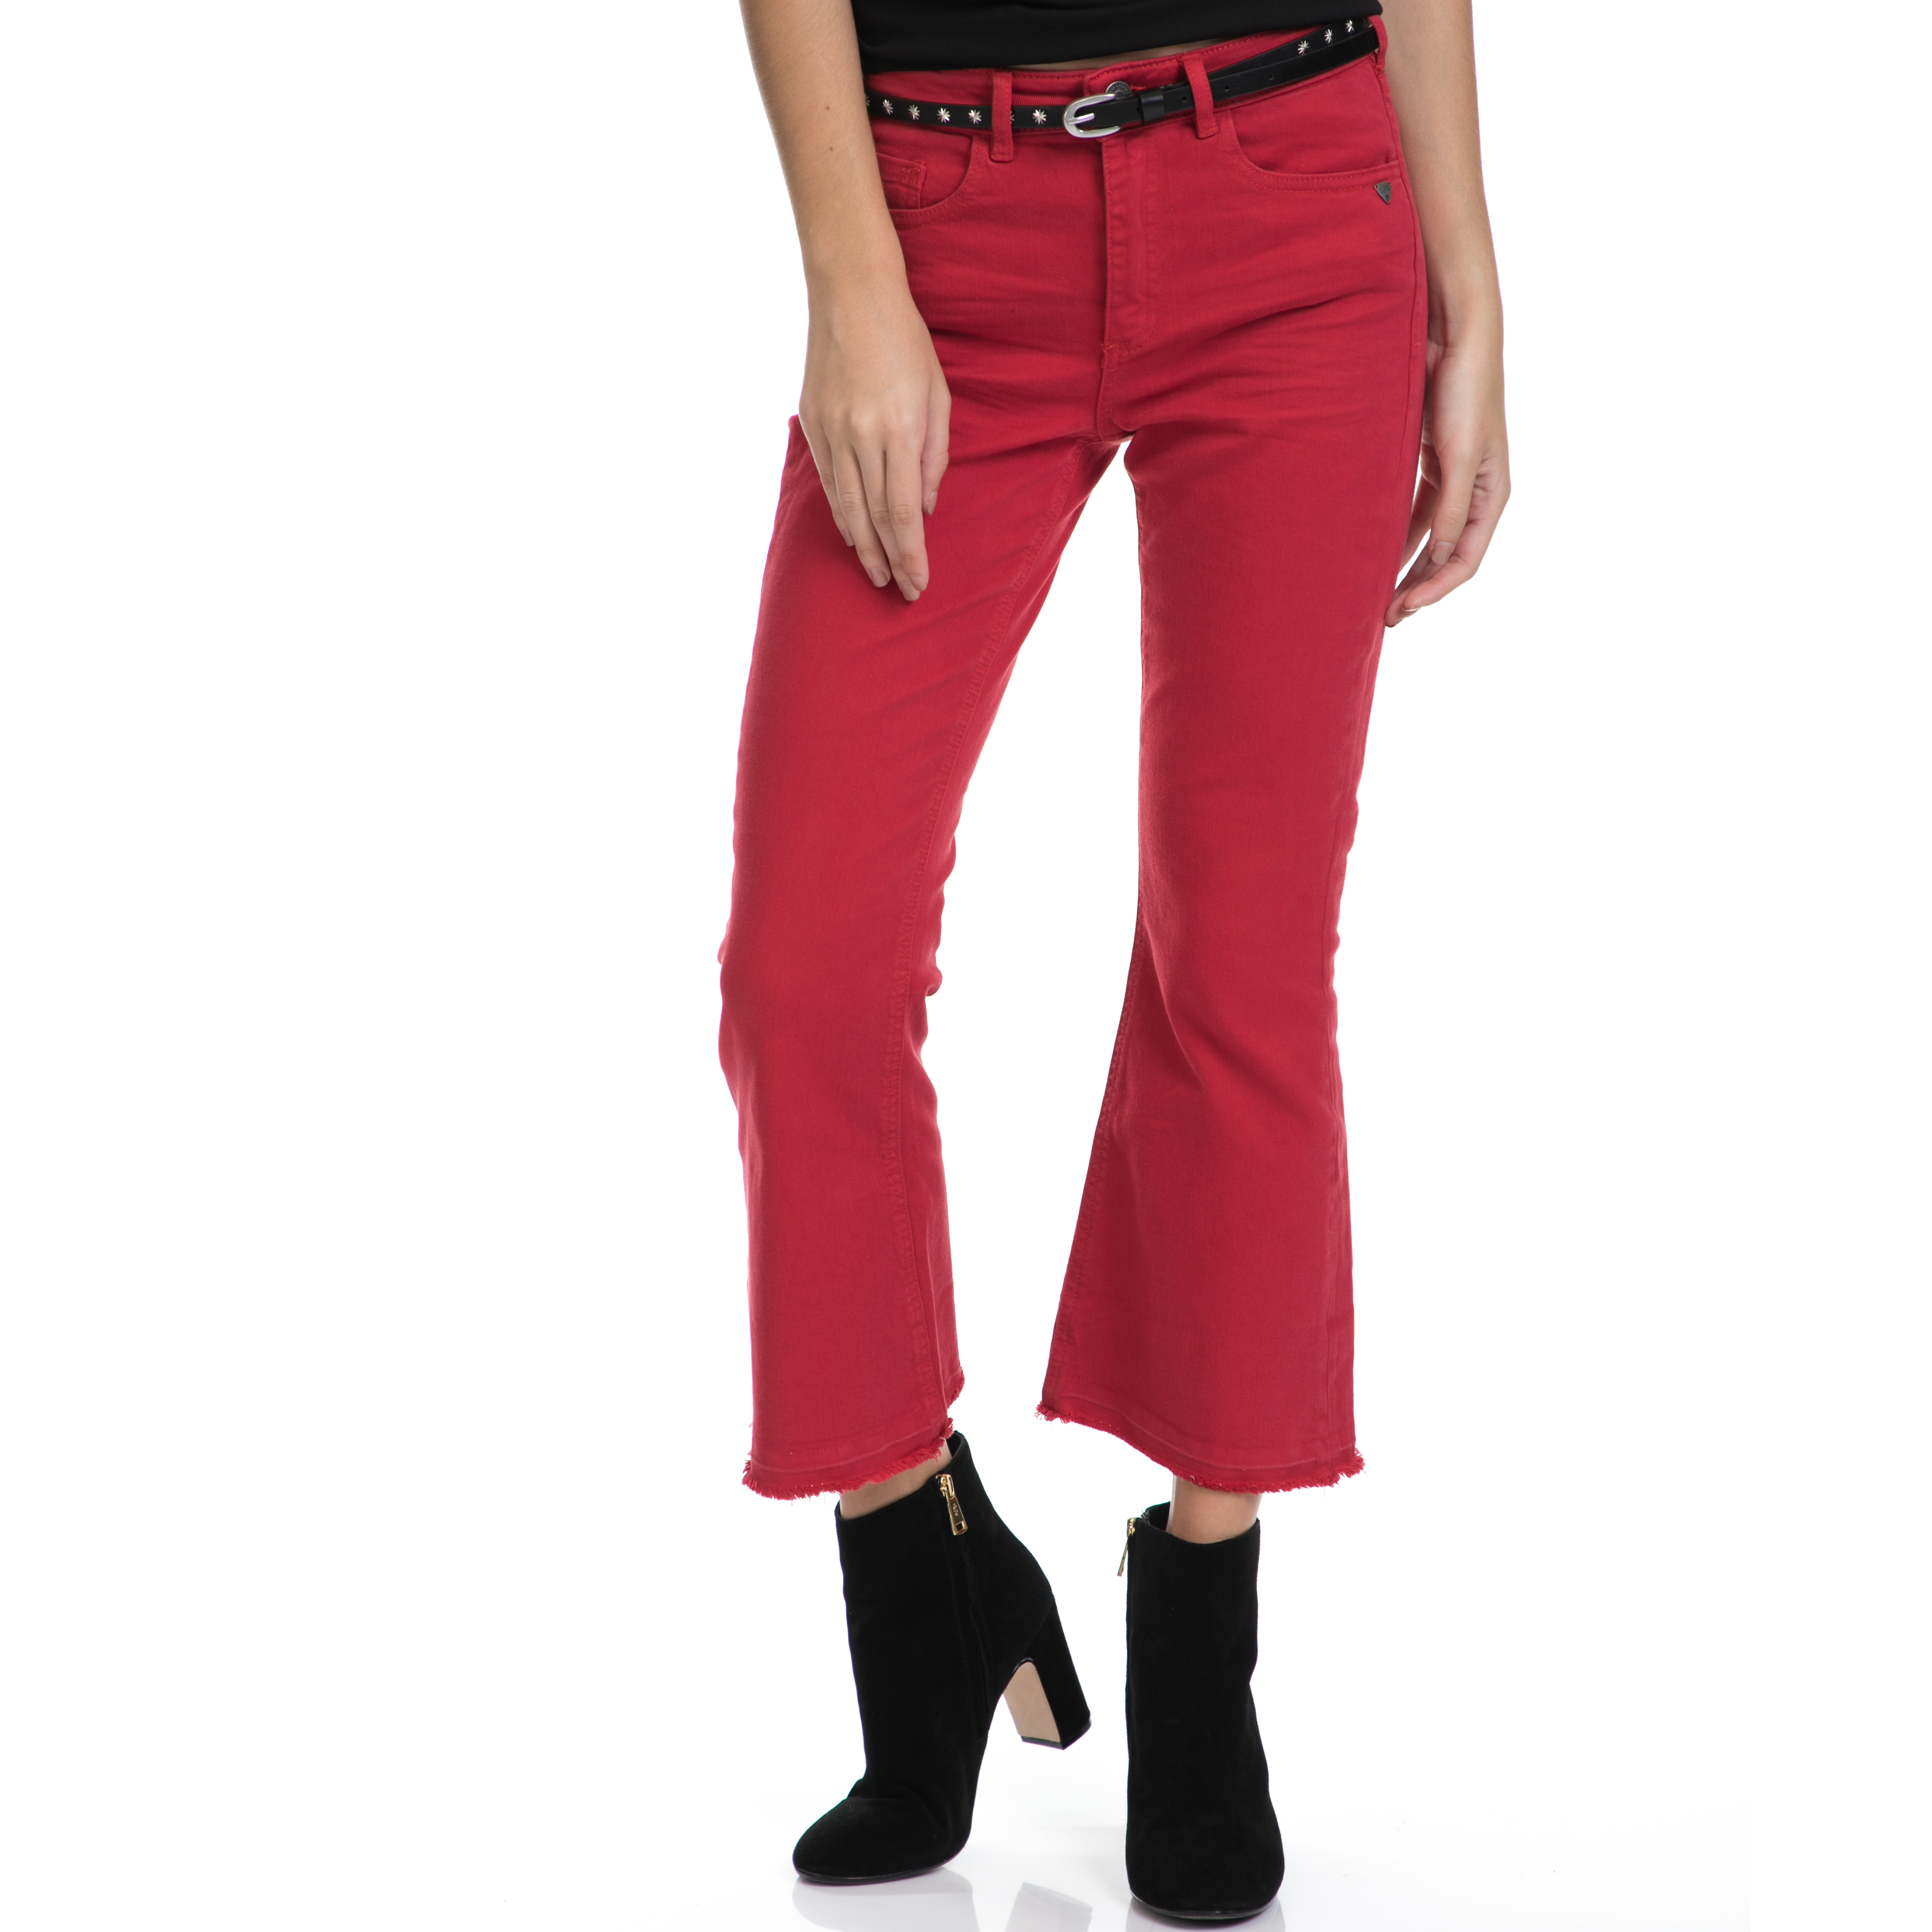 SCOTCH & SODA - Γυναικείο τζιν παντελόνι New 'Bowie SCOTCH & SODA κόκκινο Γυναικεία/Ρούχα/Παντελόνια/Cropped